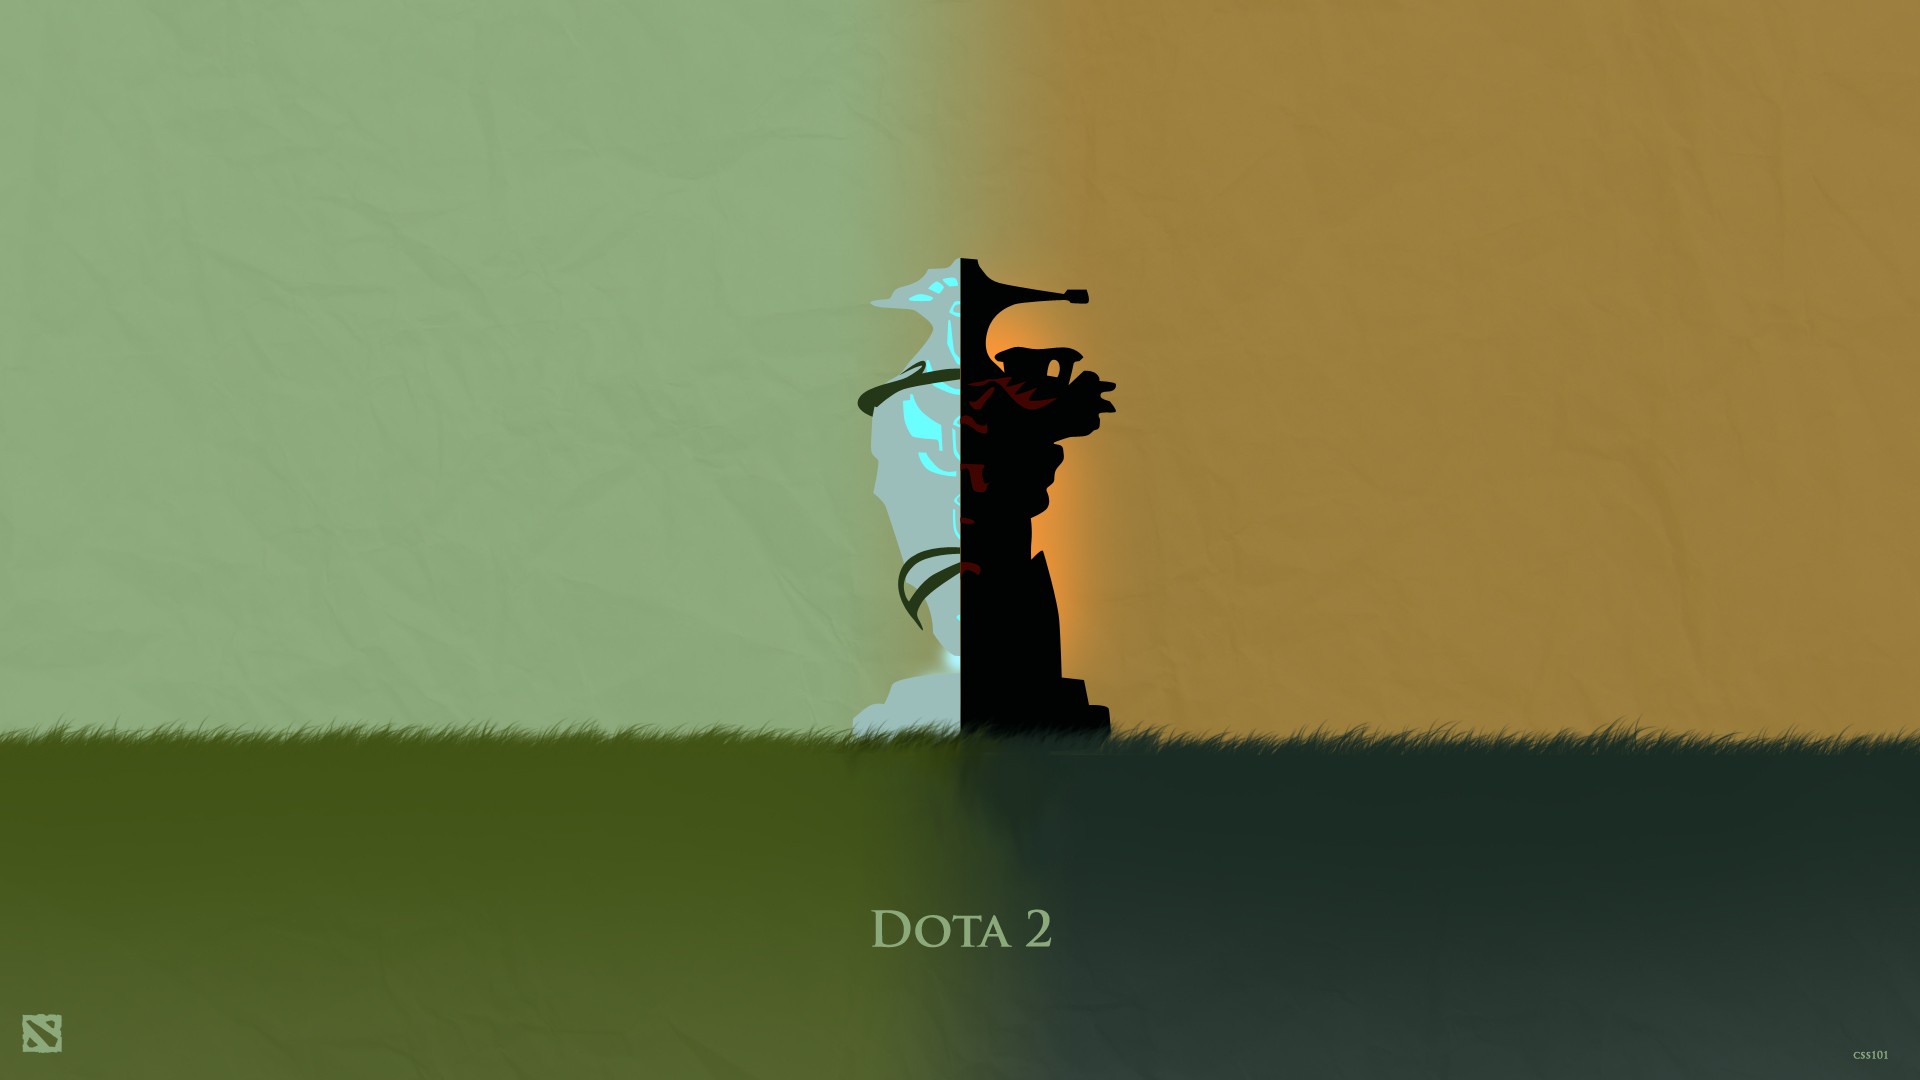 Dota 2, Dota, Valve, Valve Corporation, Defense Of The Ancients, Heroes Wallpaper